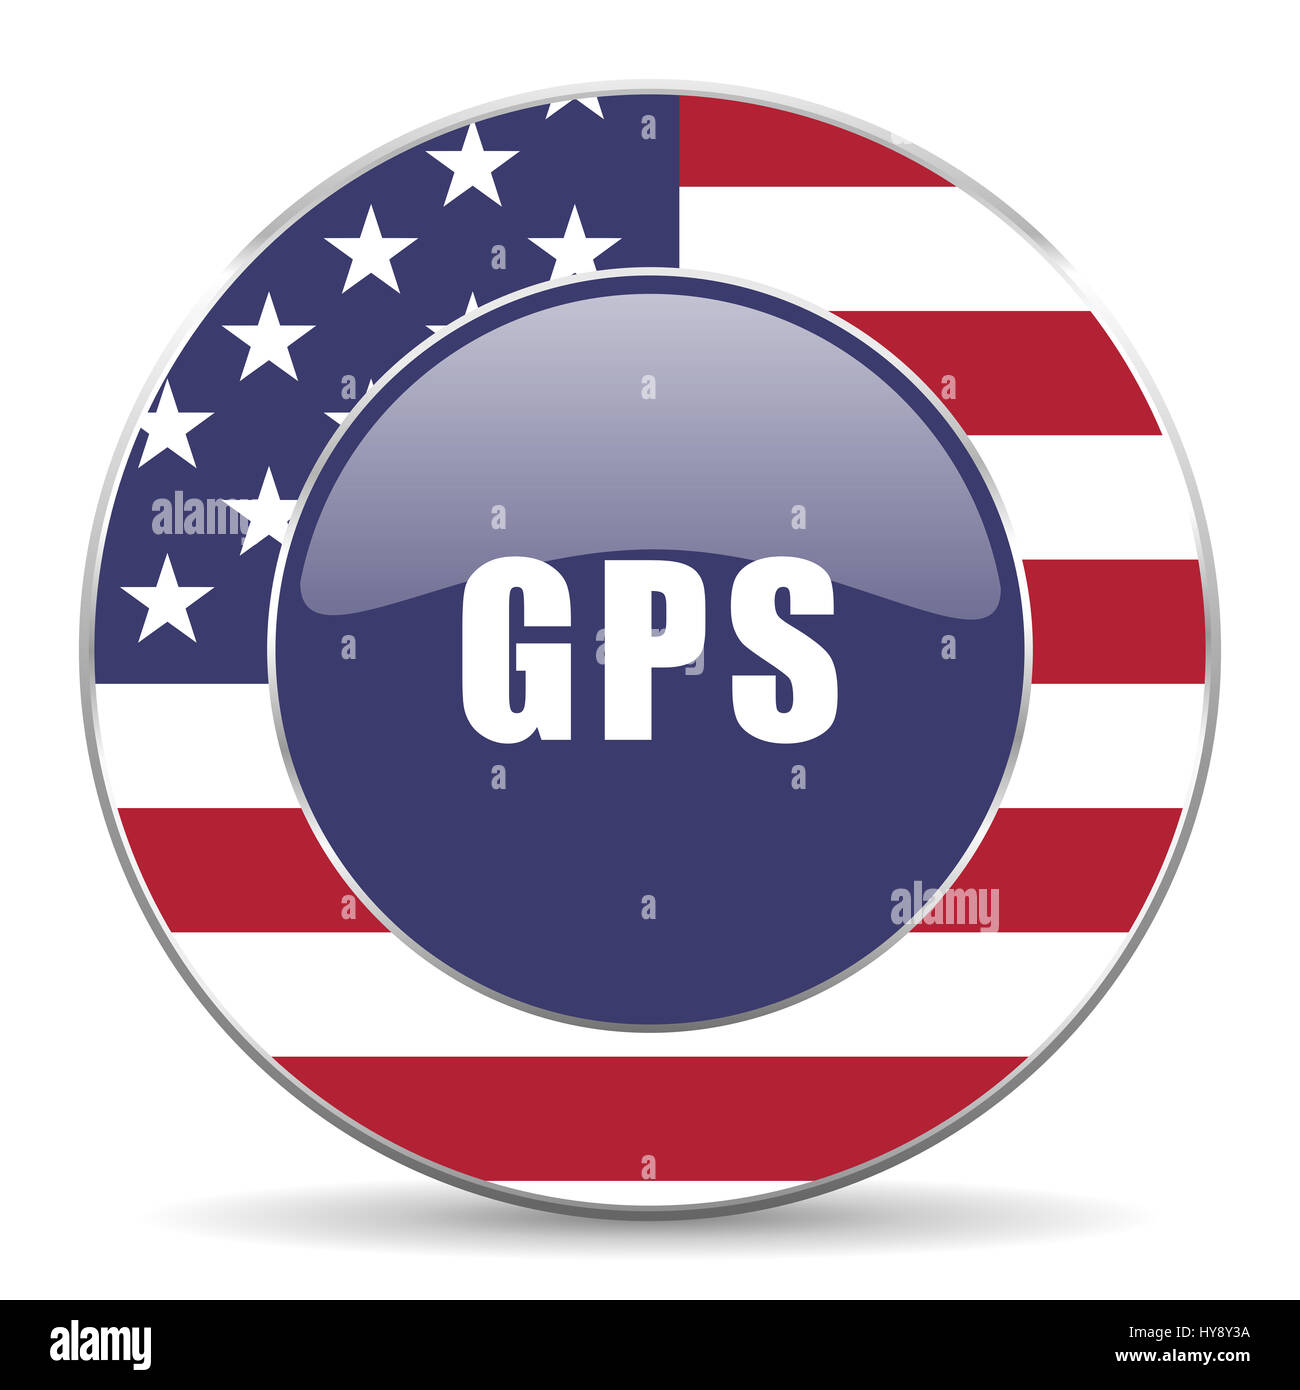 Gps usa design web american round internet icon with shadow on white  background Stock Photo - Alamy